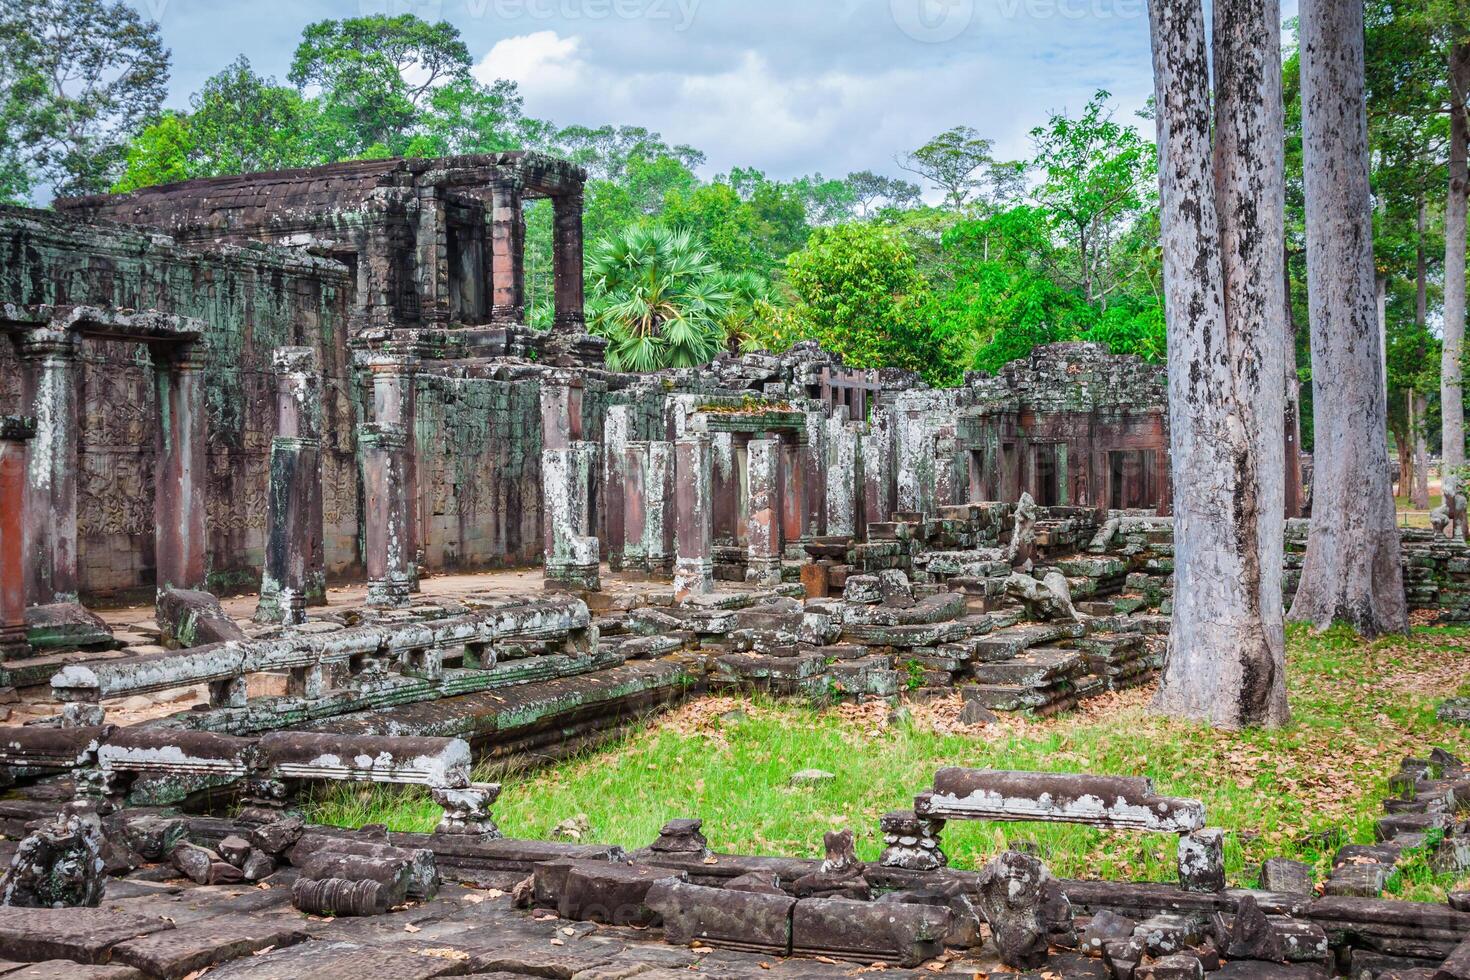 angkor thom Camboya. bayon Khmer templo en angkor wat histórico sitio foto